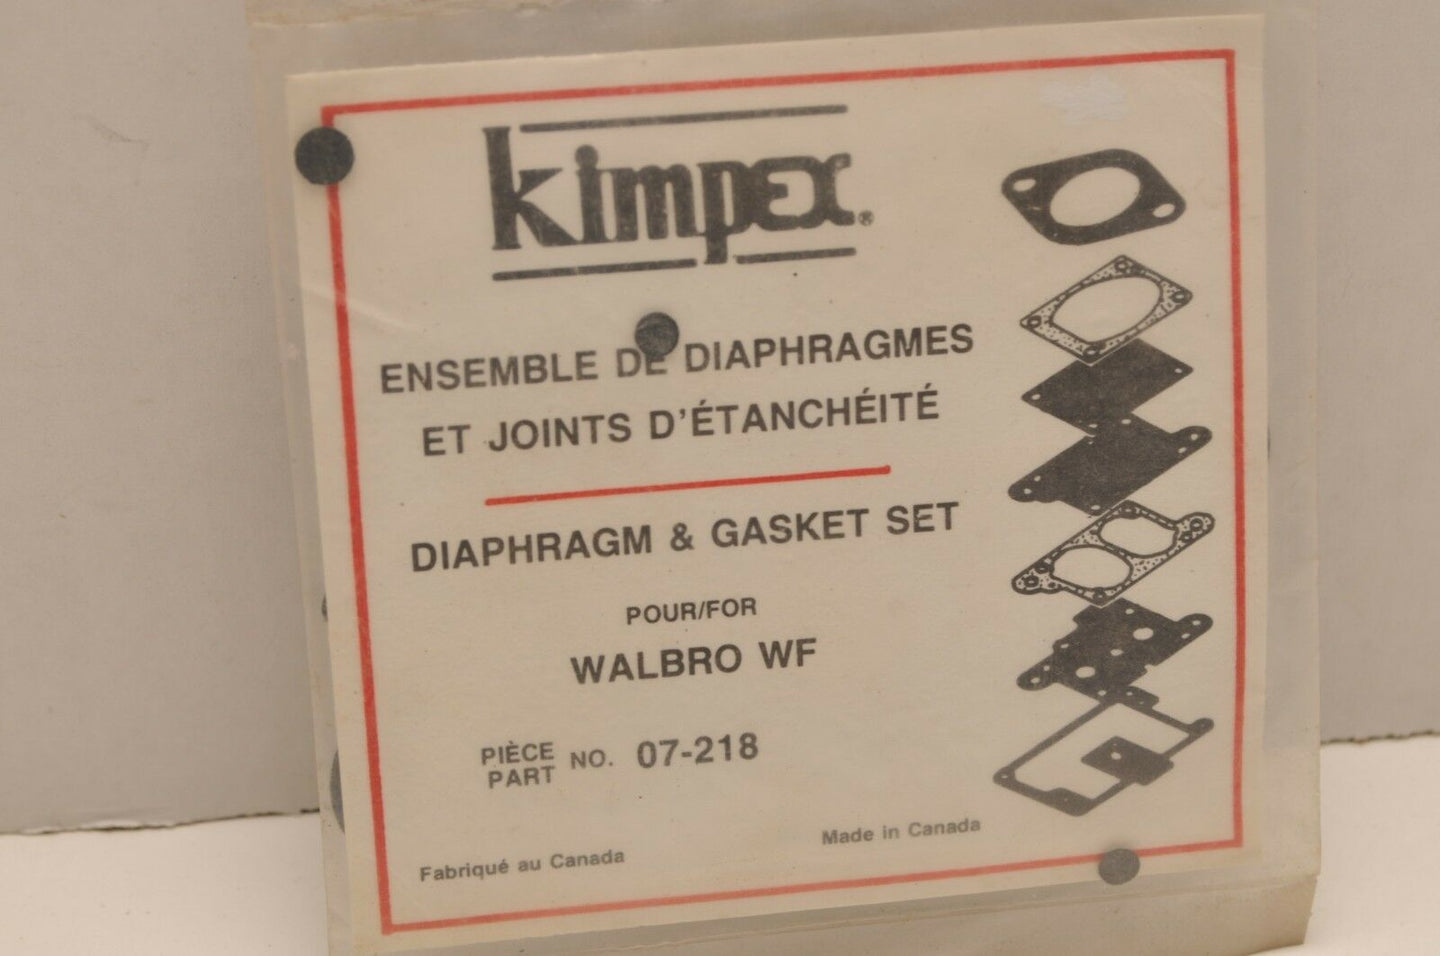 NOS Kimpex 07-218 Diaphragm & Gasket Set - Walbro WF